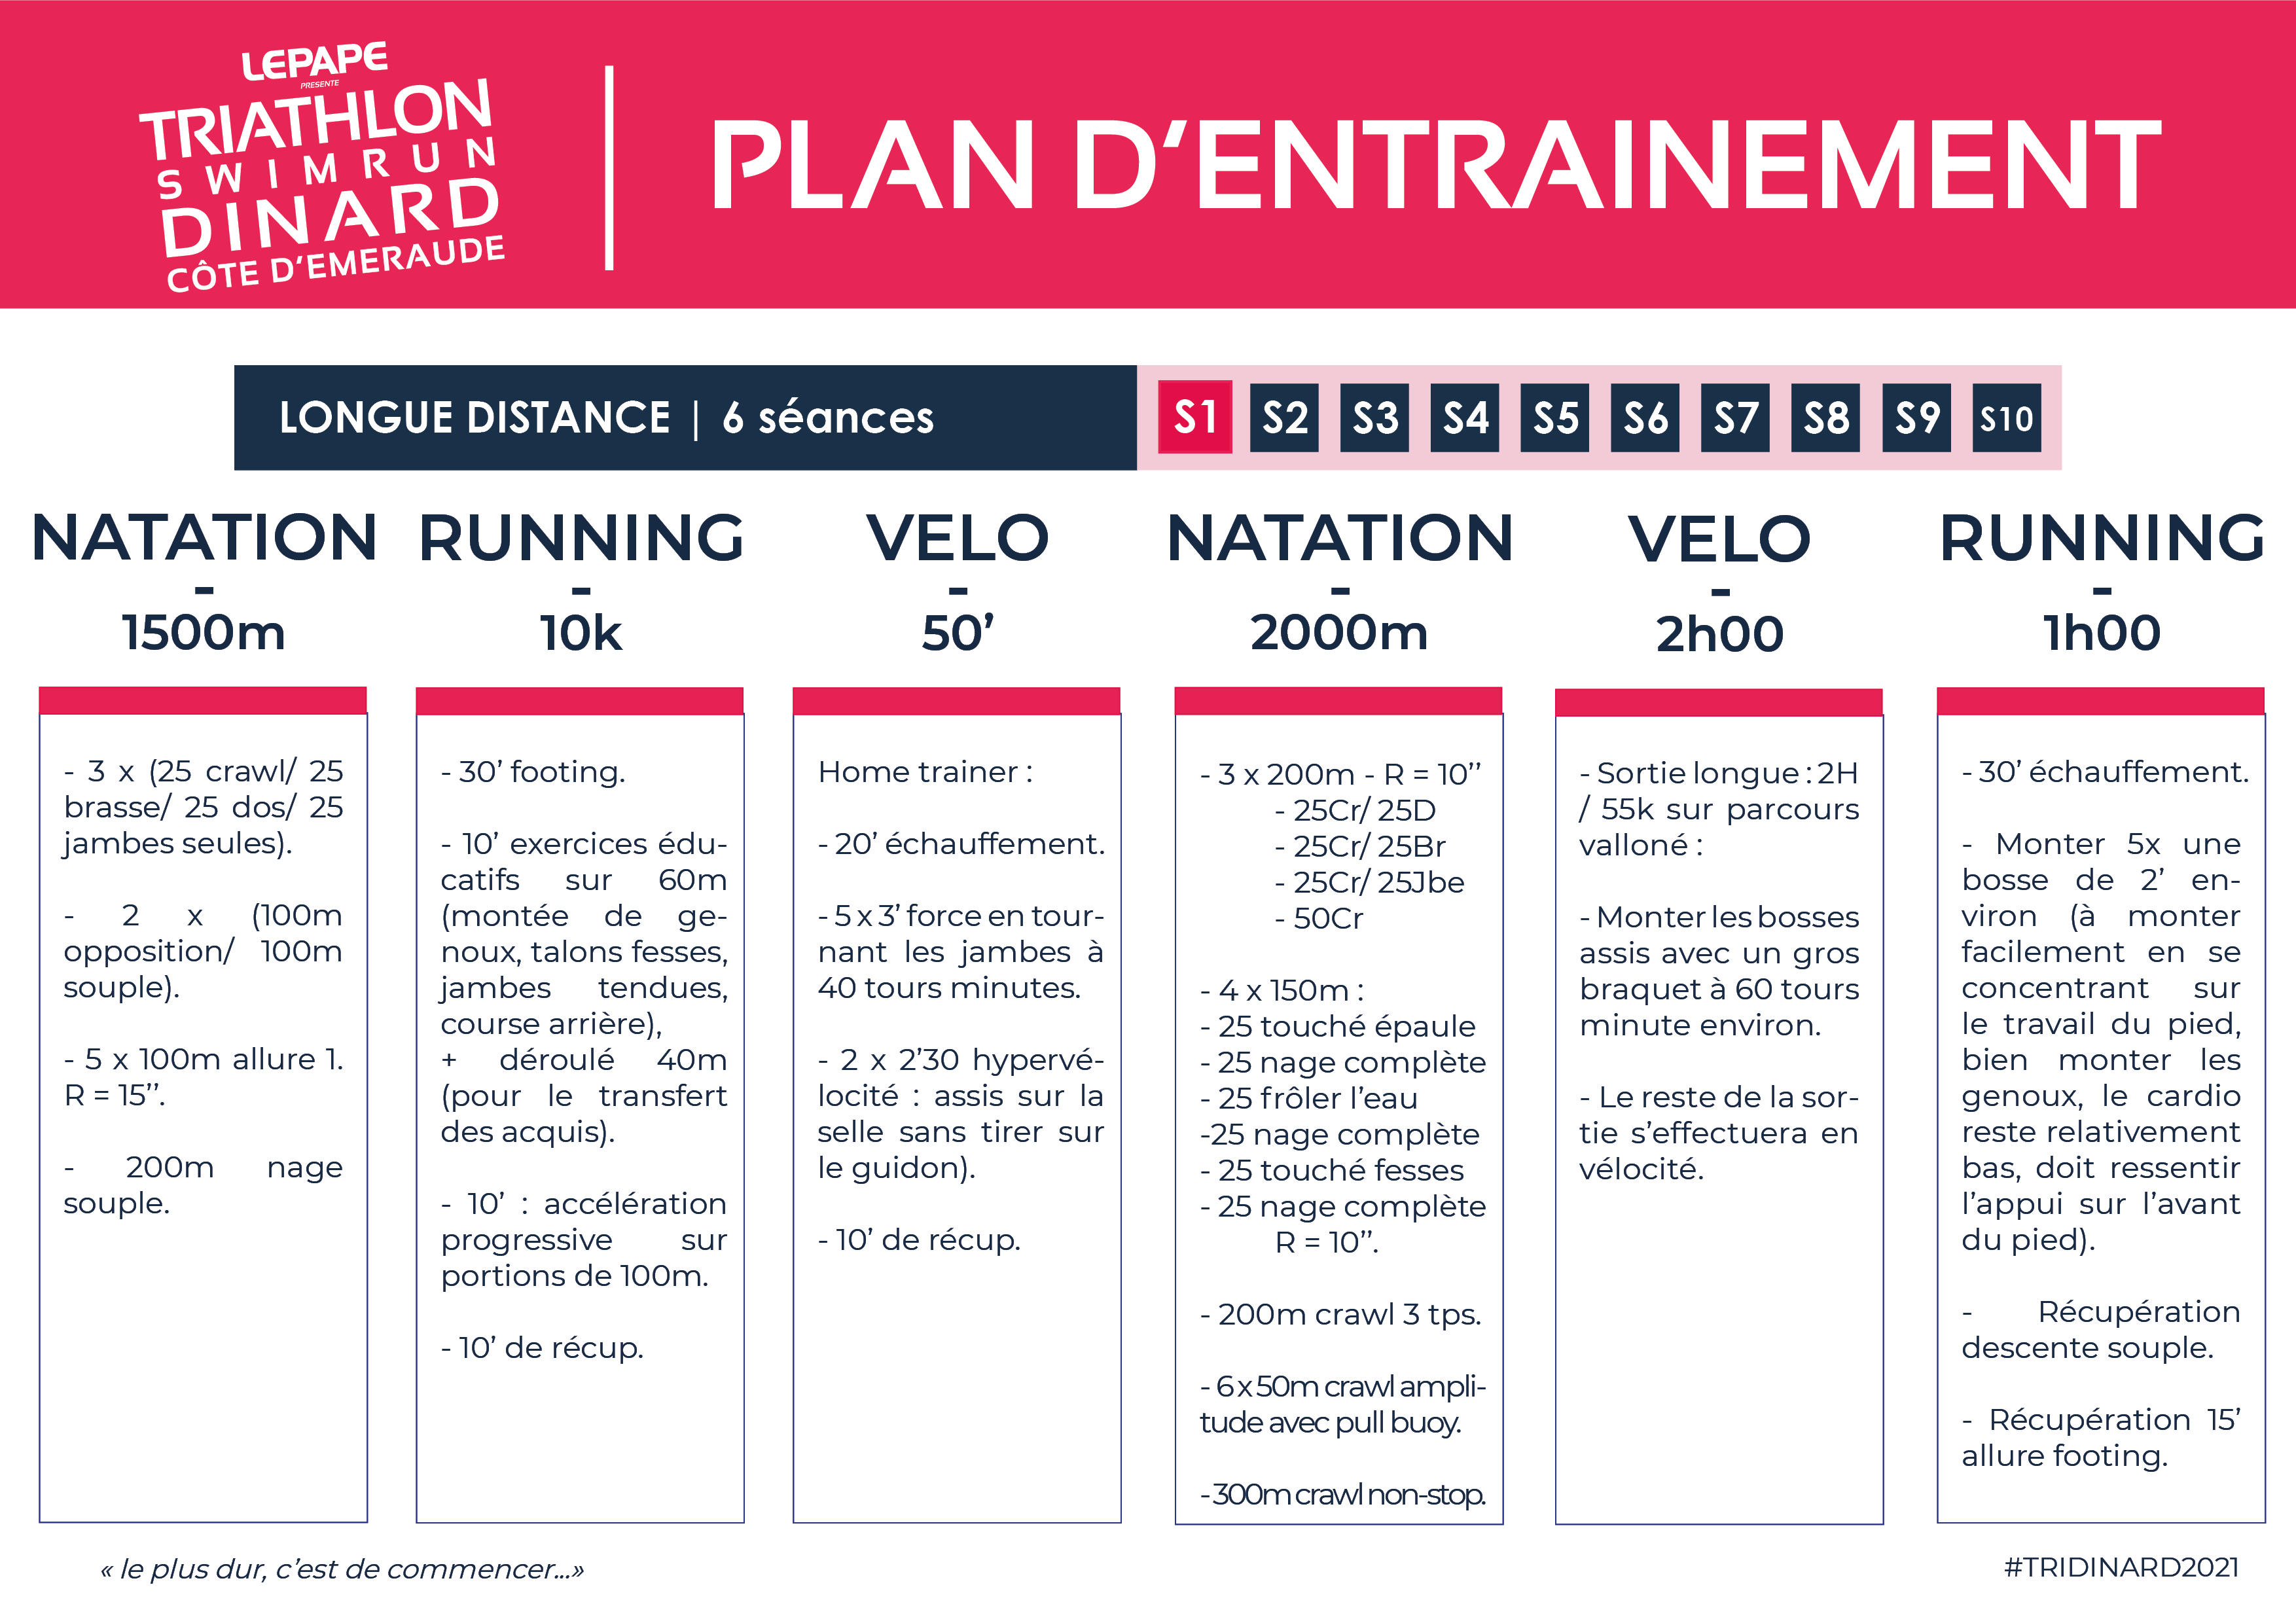 Plans Dentrainement Triathlon Dinard Côte Demeraude Lepape